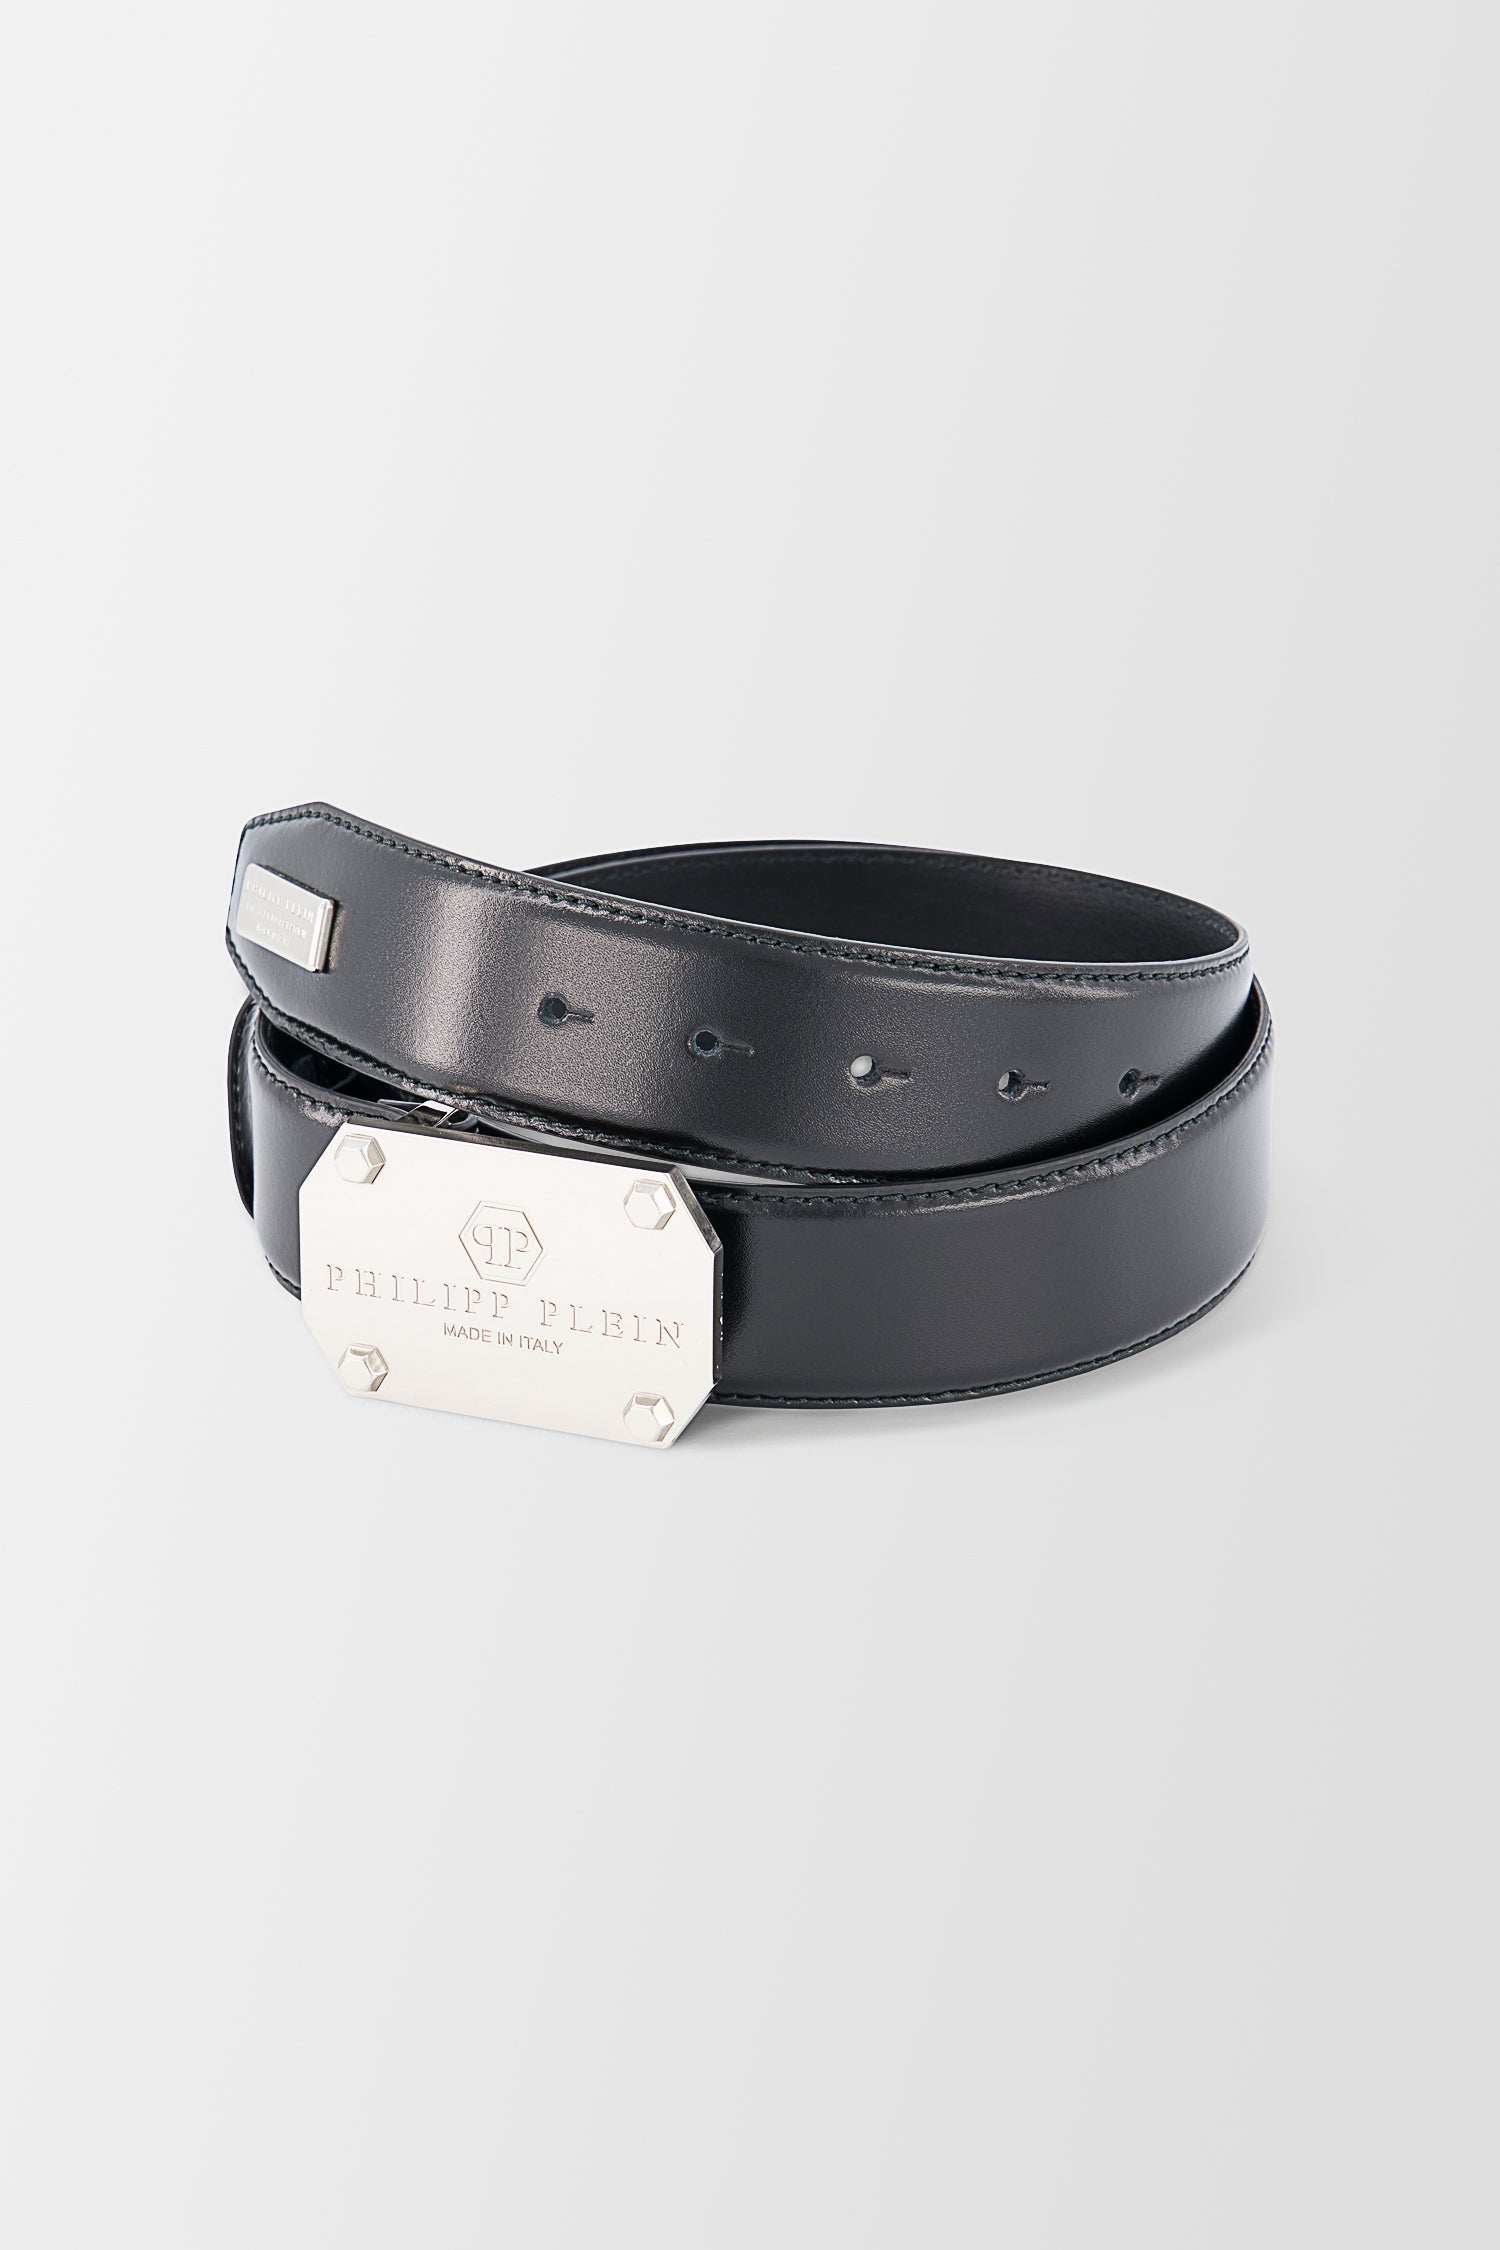 Philipp Plein Black Leather Original Belt